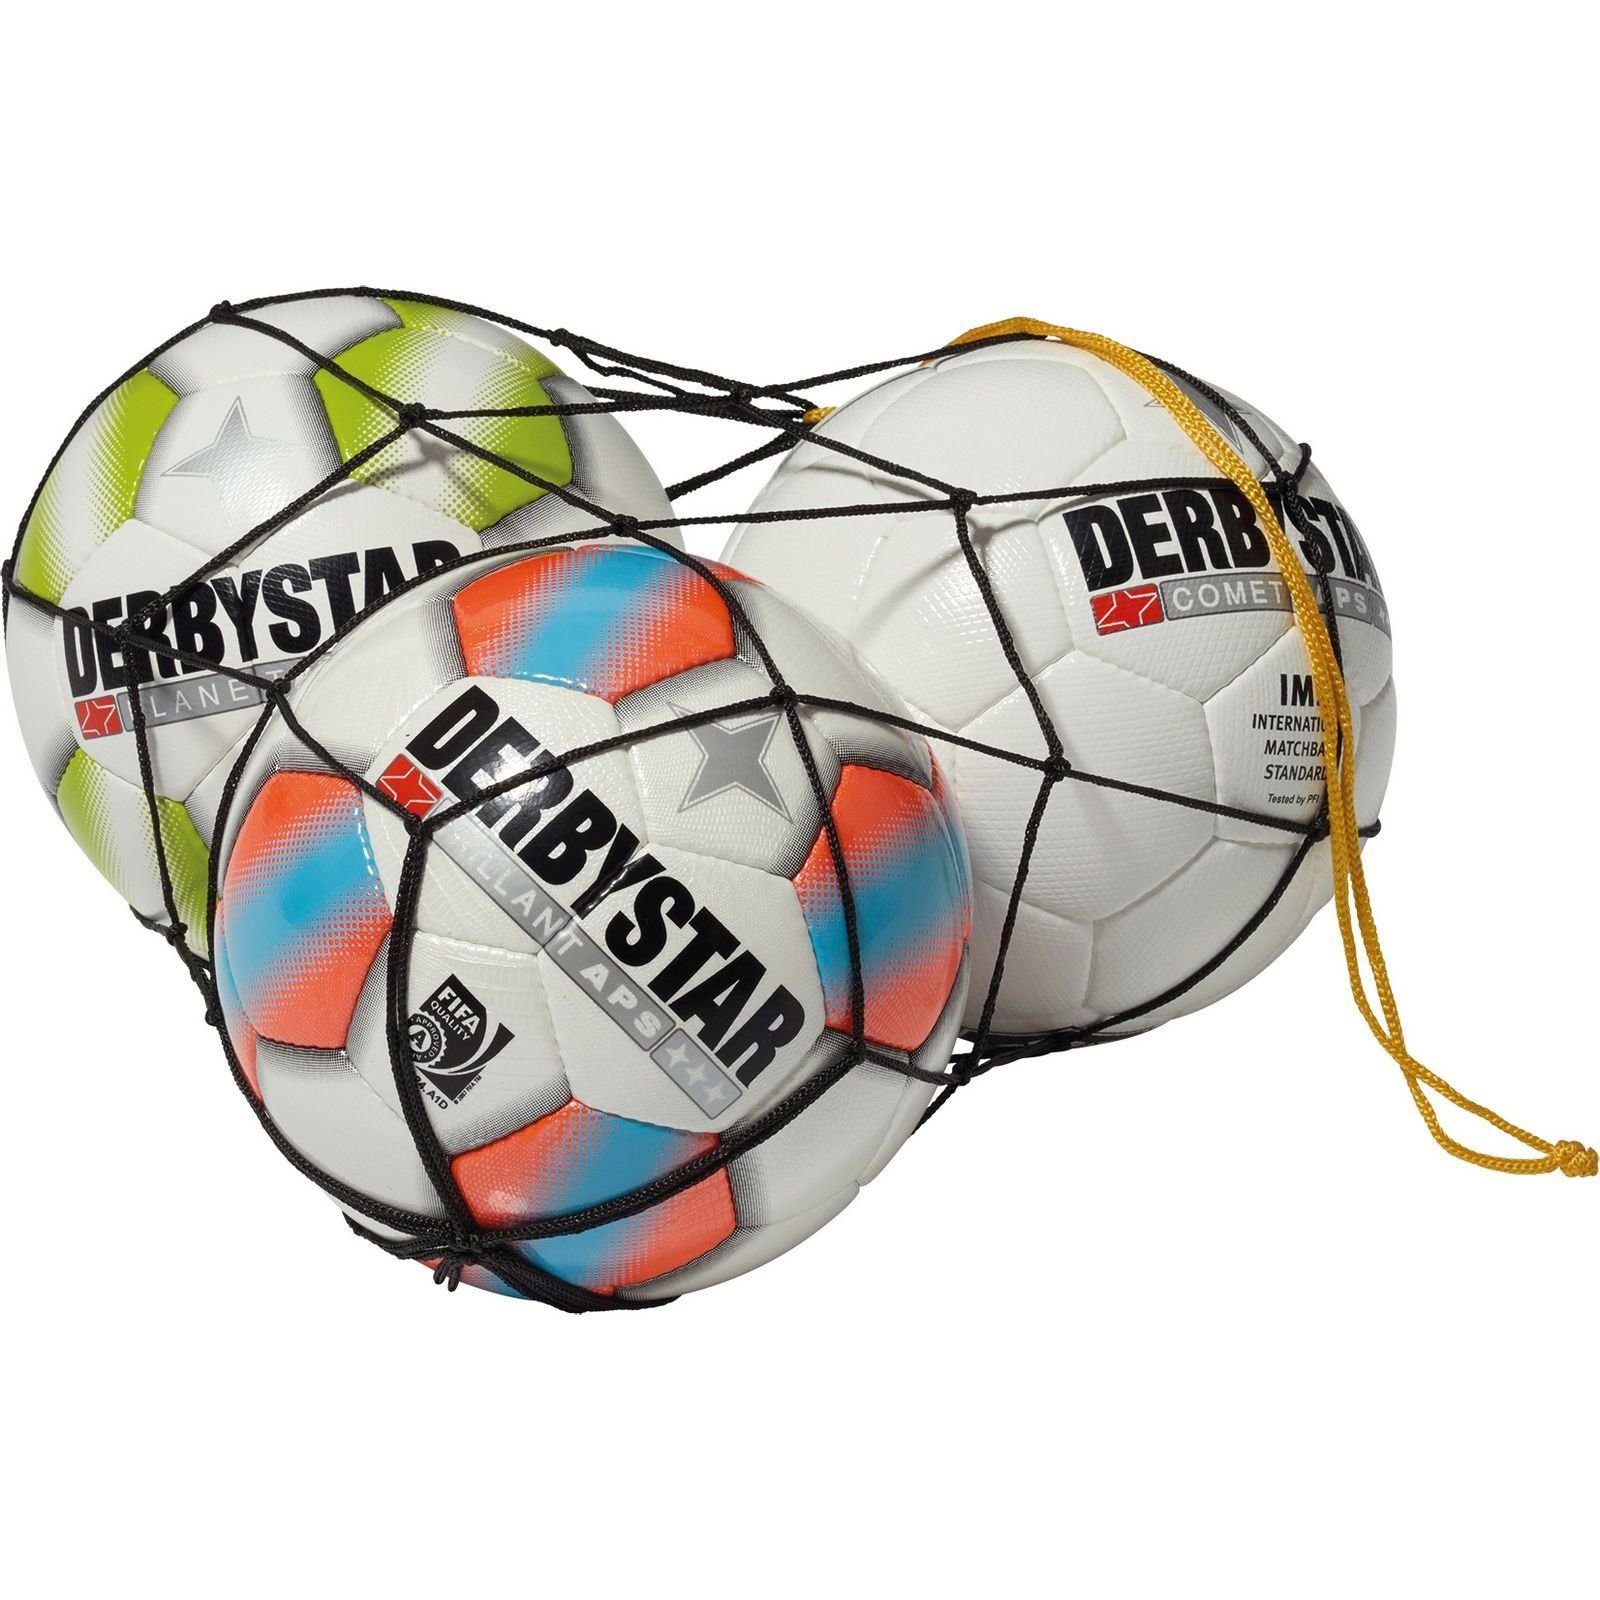 Derbystar Basketballnetz Ballnetz Polyester, Fußbälle für